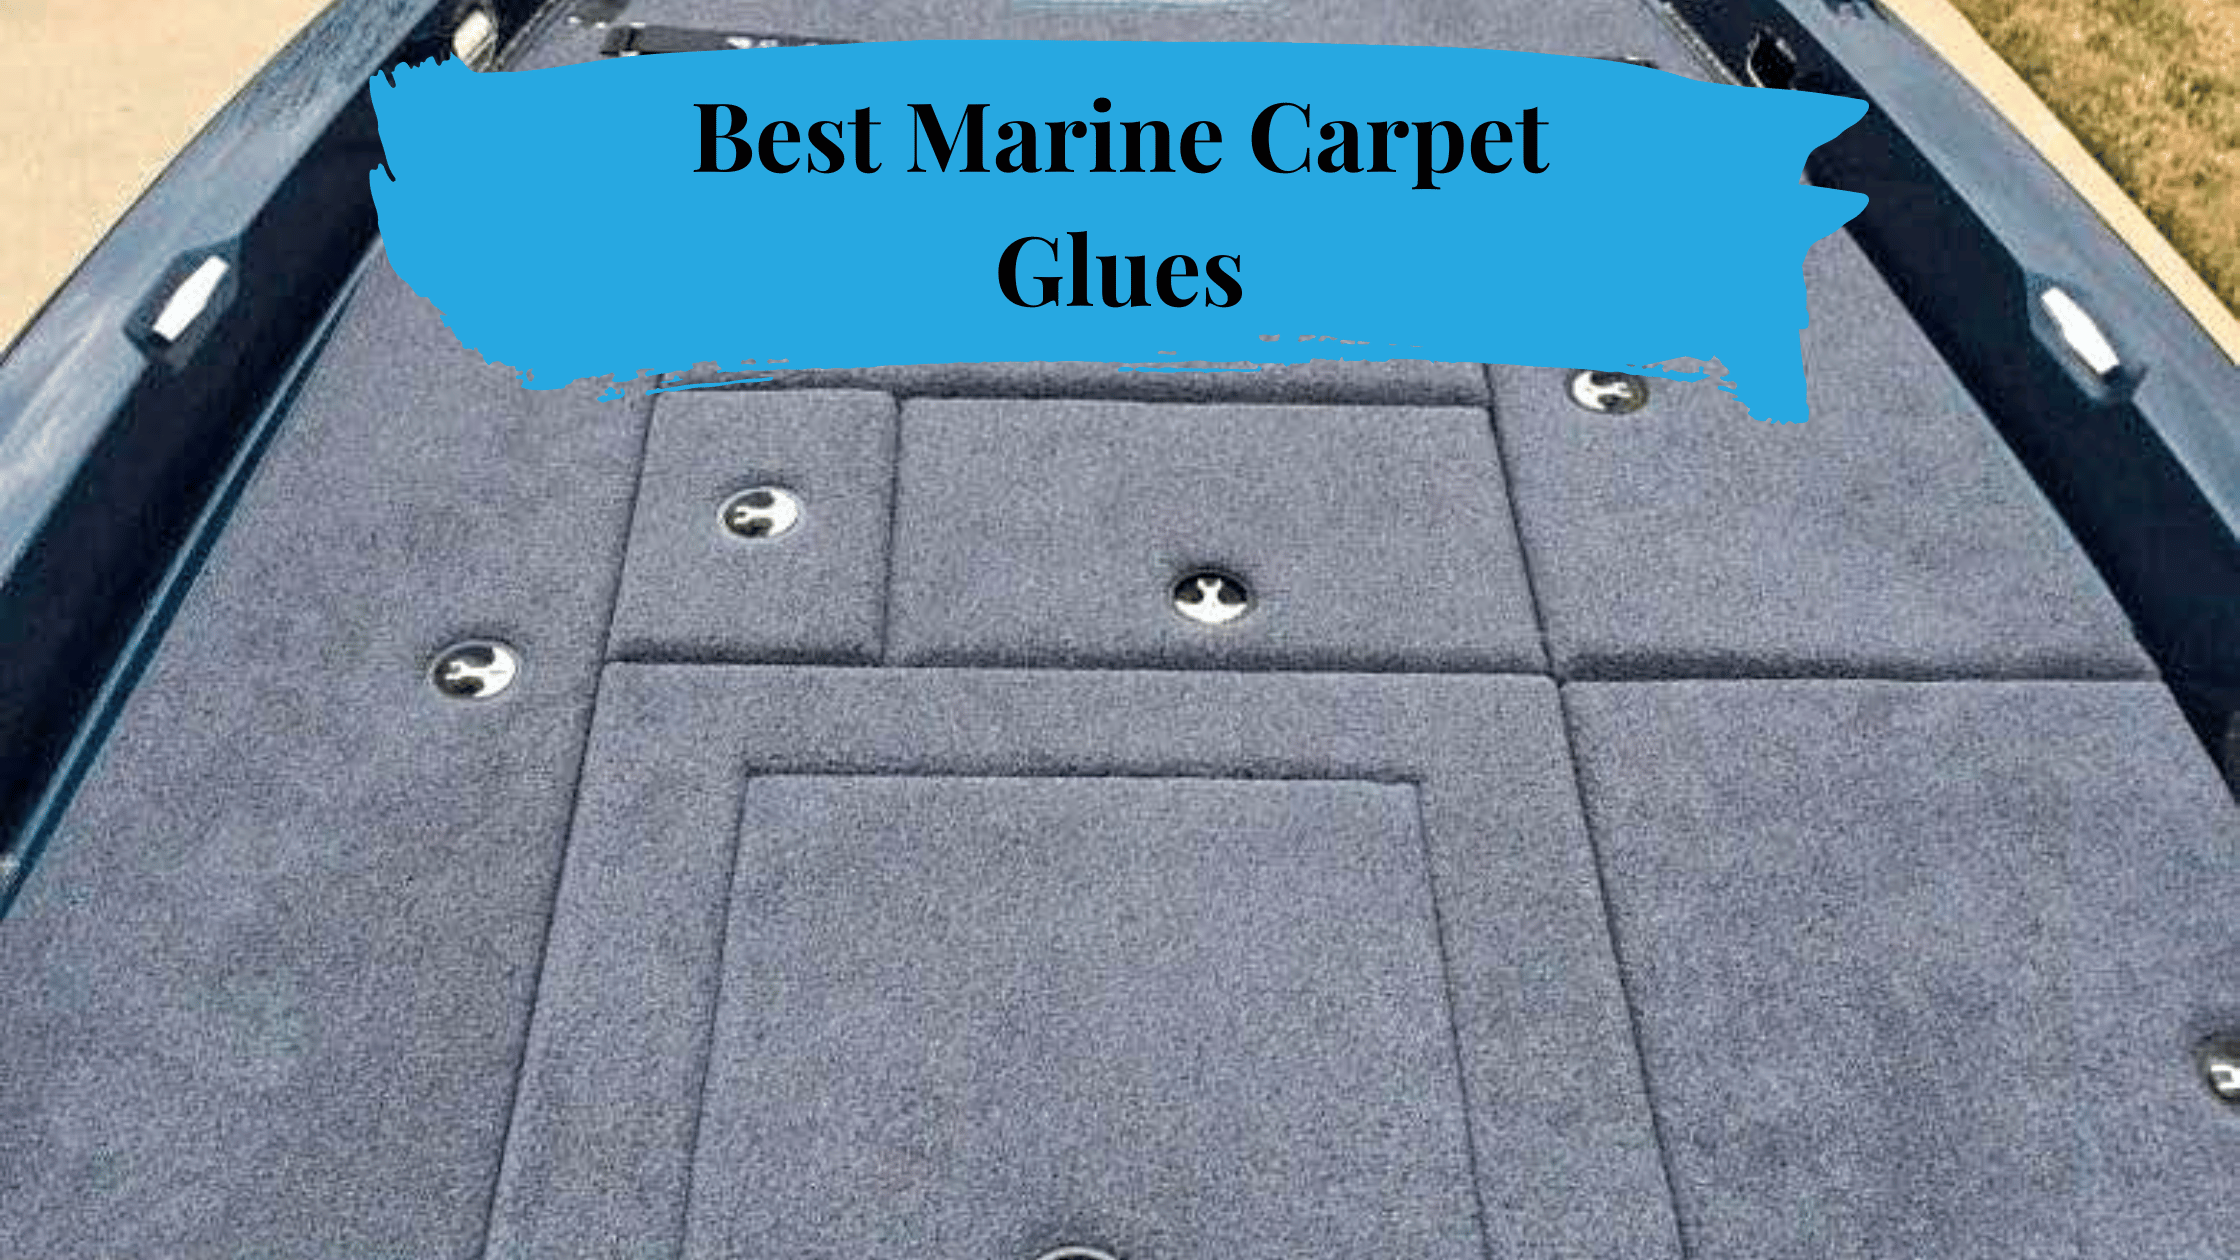 Best Marine Carpet Glues